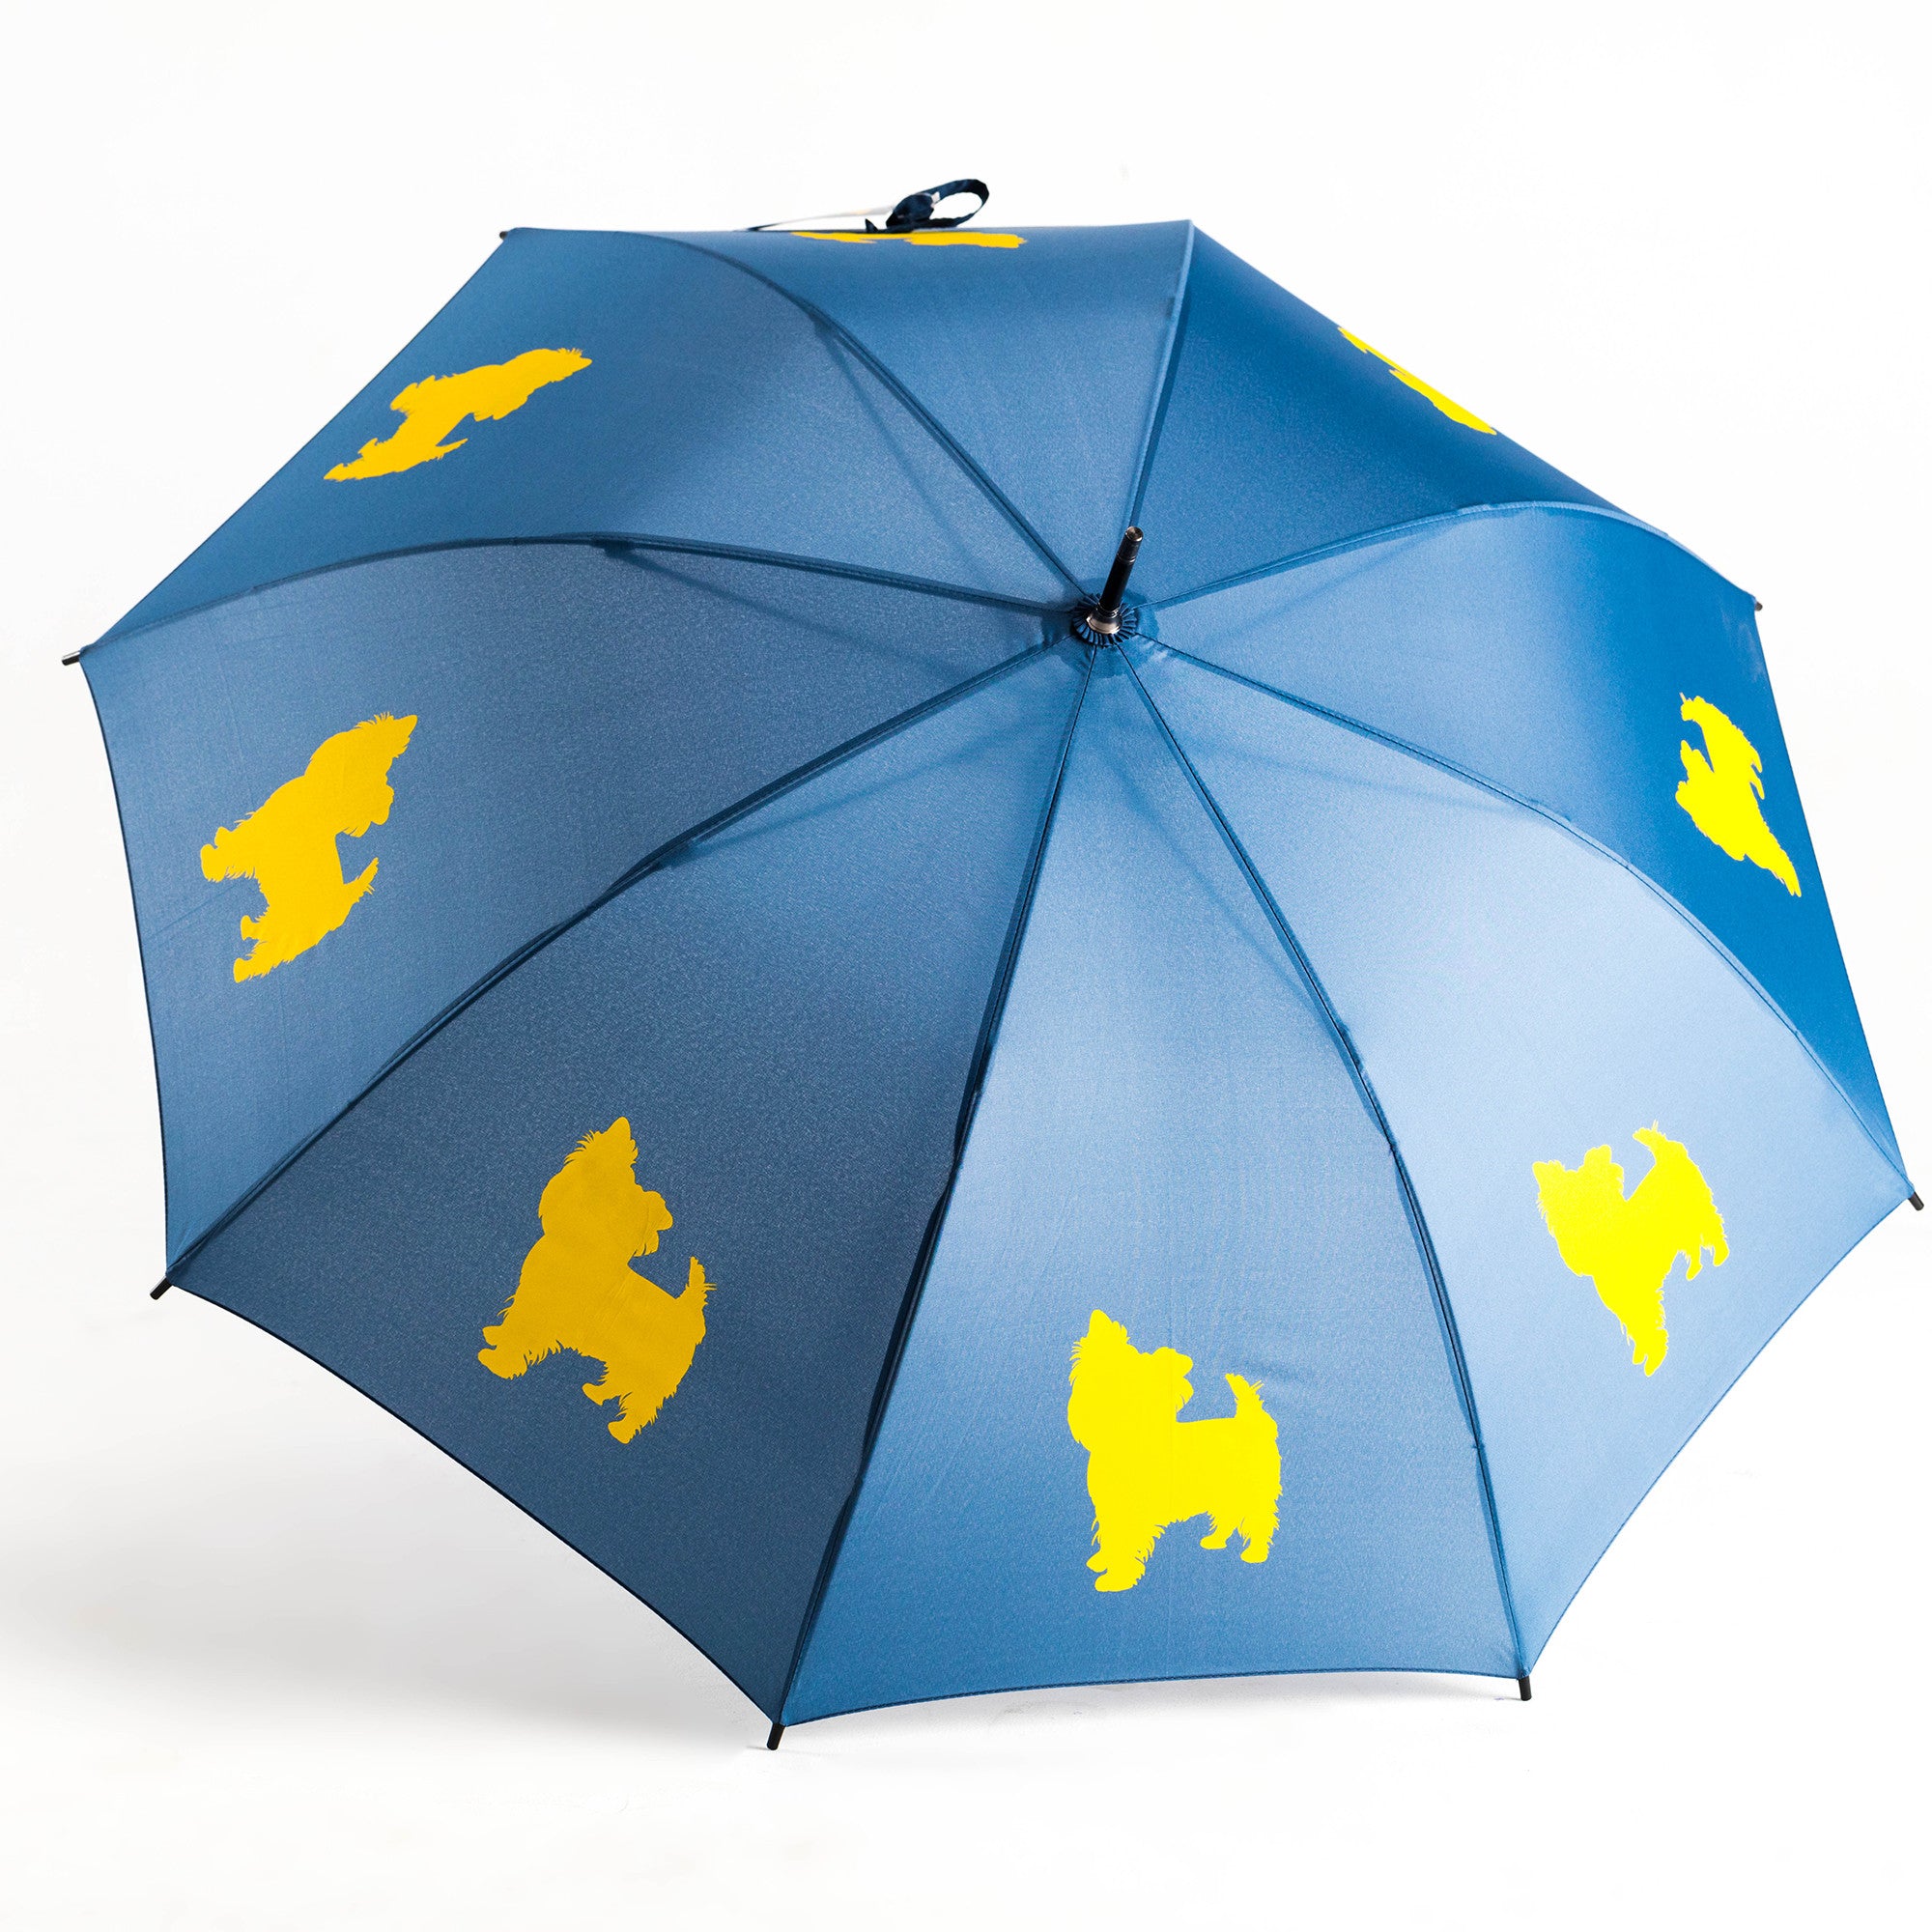 Yorkshire Terrier Auto Open Umbrella | Yellow on Navy Blue